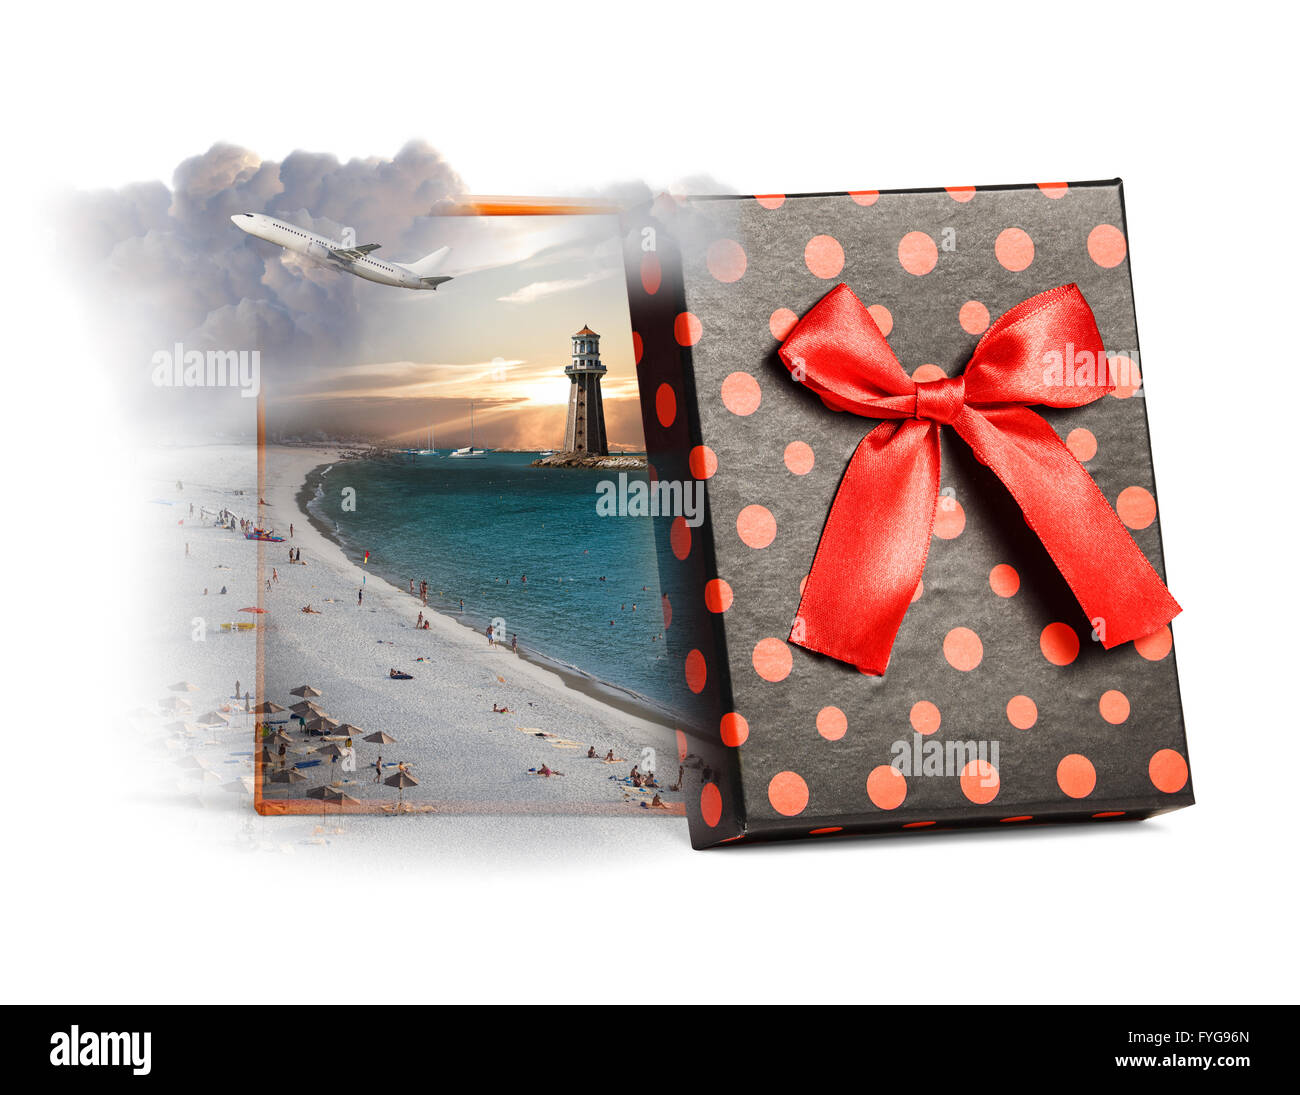 Summer beach inside gift box Stock Photo